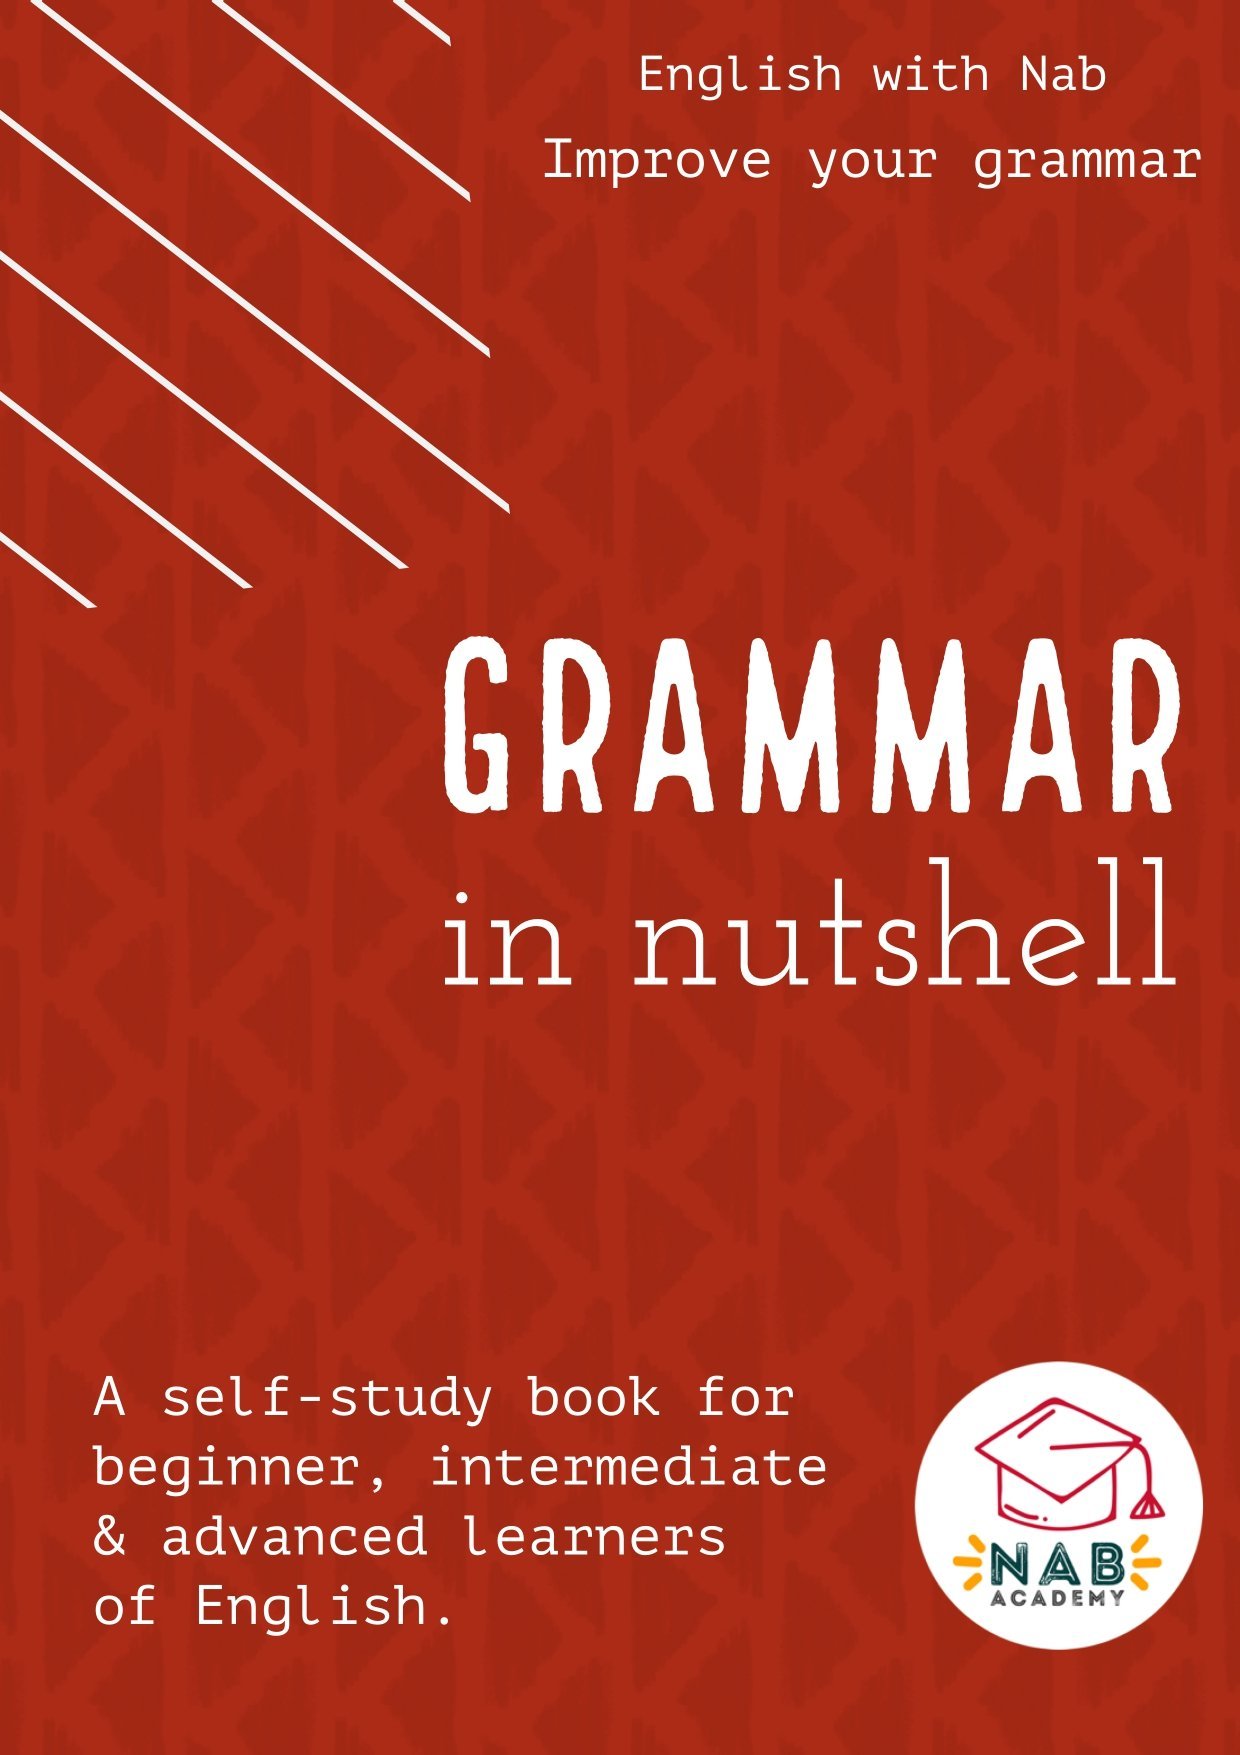 Gramática inglesa. The English Grammar in a Nutshell